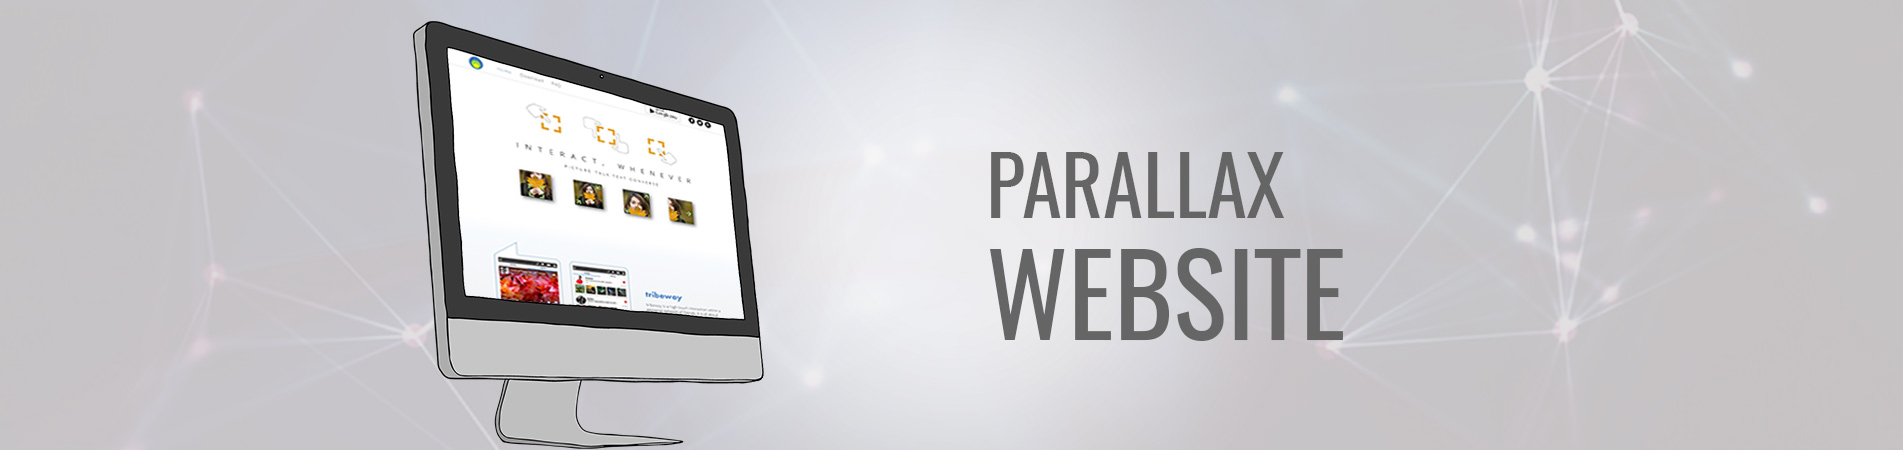 Parallax Website Design Development